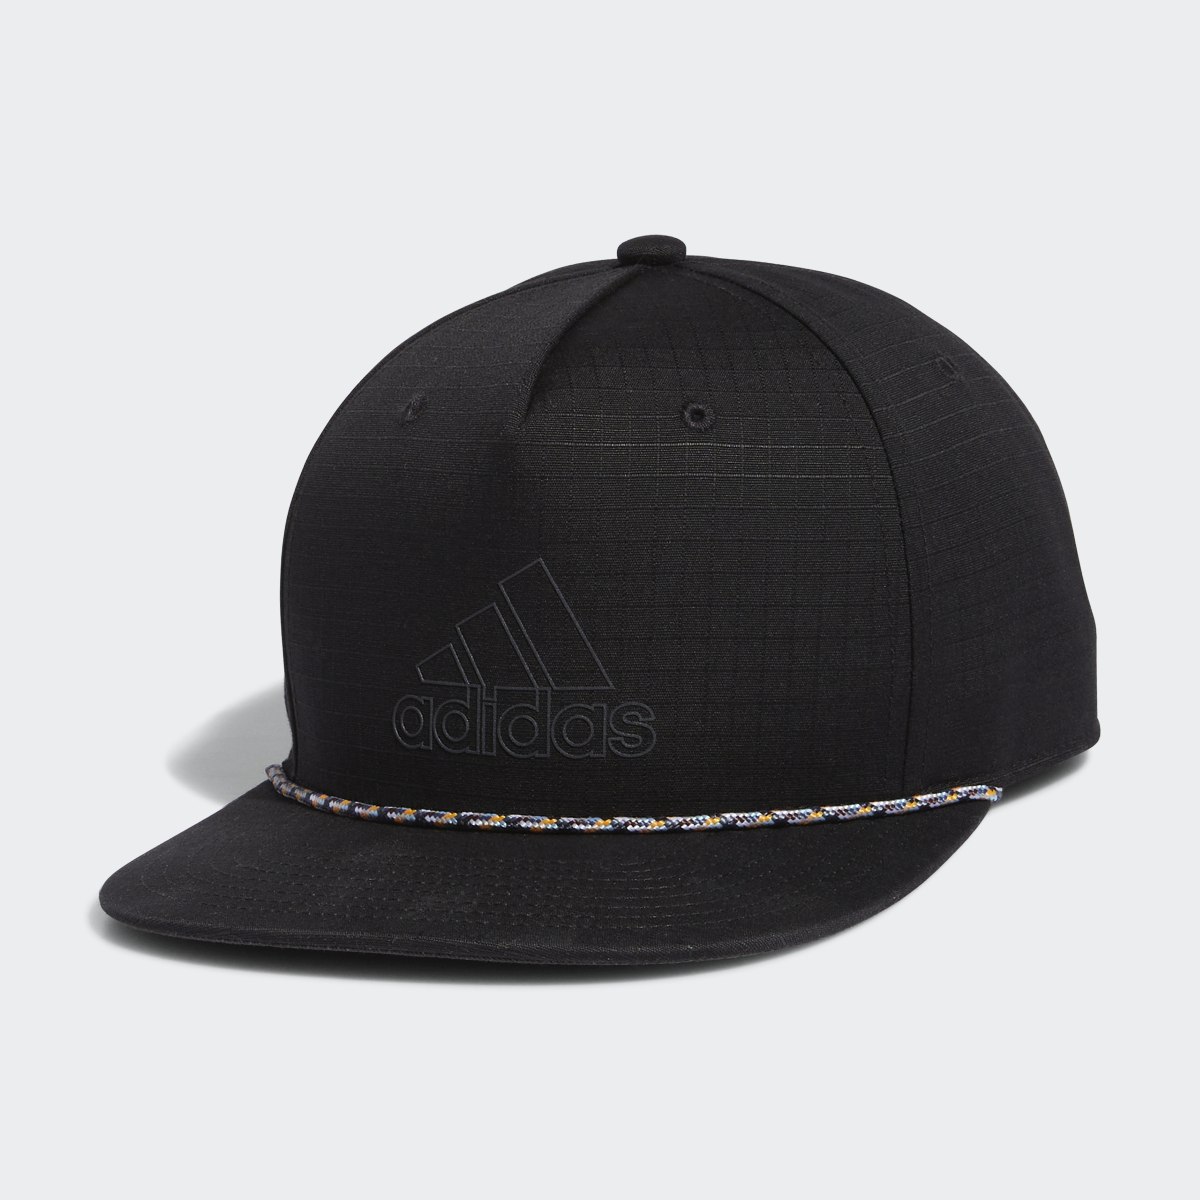 Adidas Affiliate Snapback Hat. 4